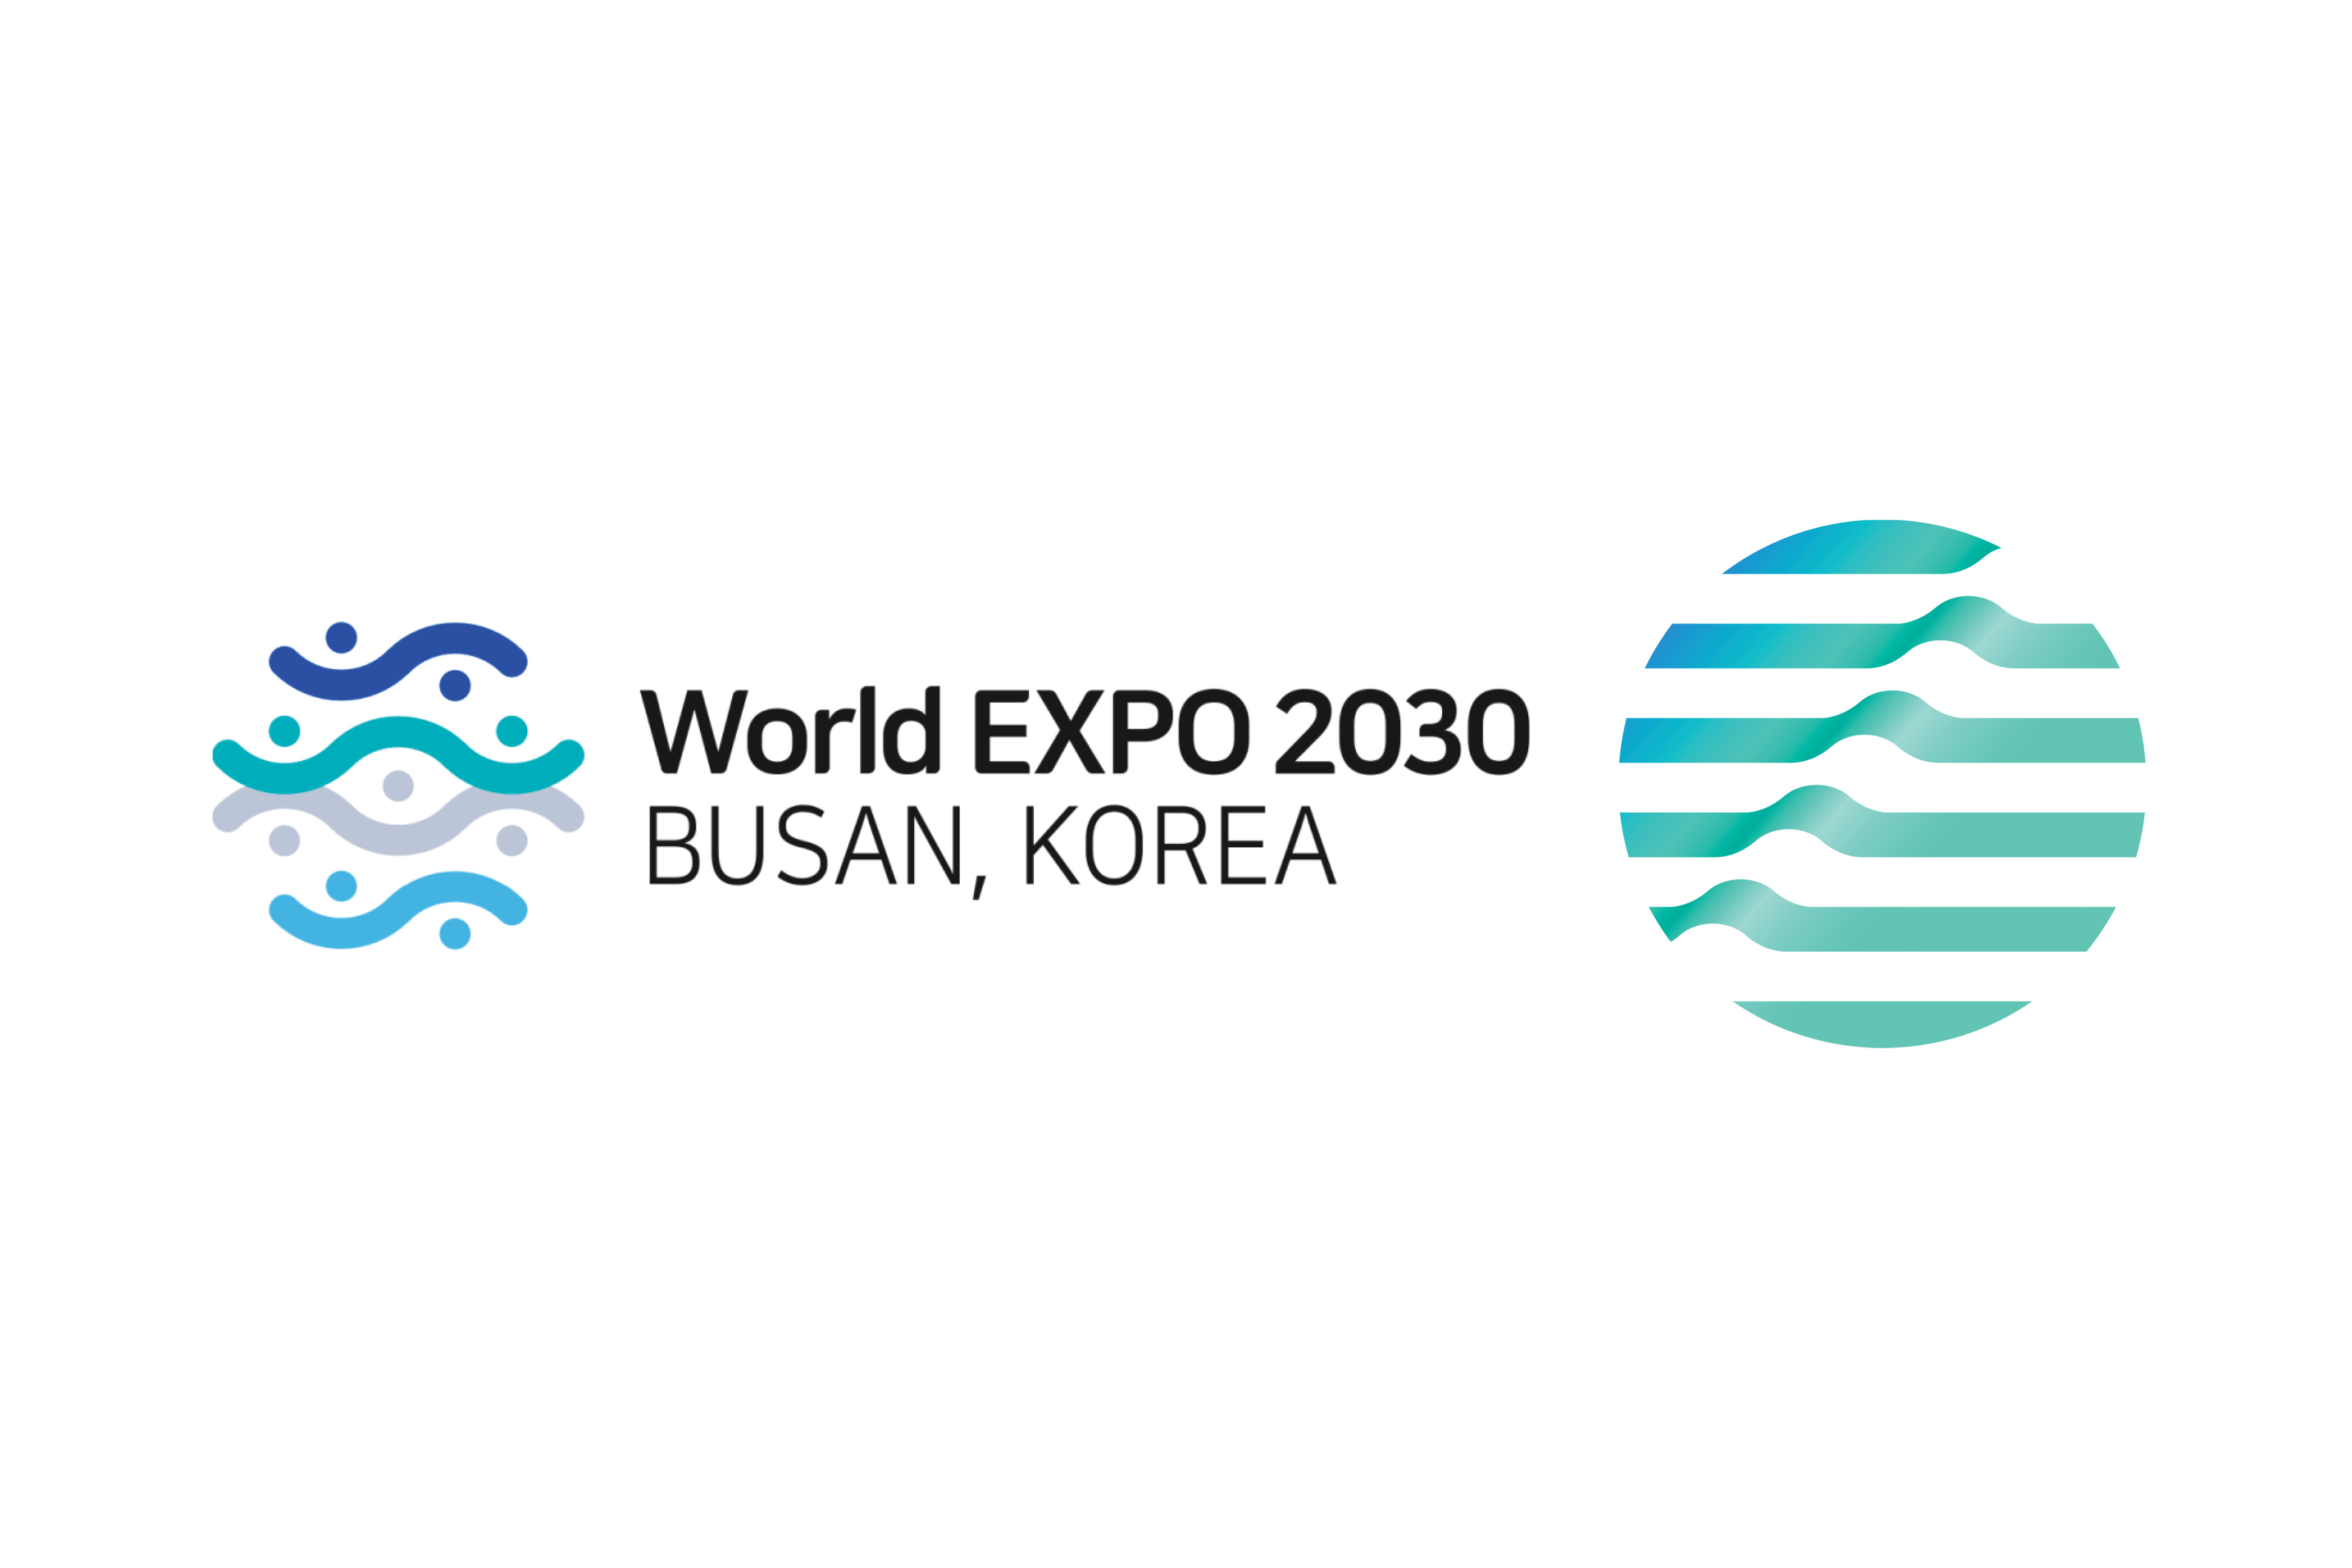 Billboard Japan: SURF Music Partners with Busan, South Korea to Source World Expo 2030 Bid Theme Song